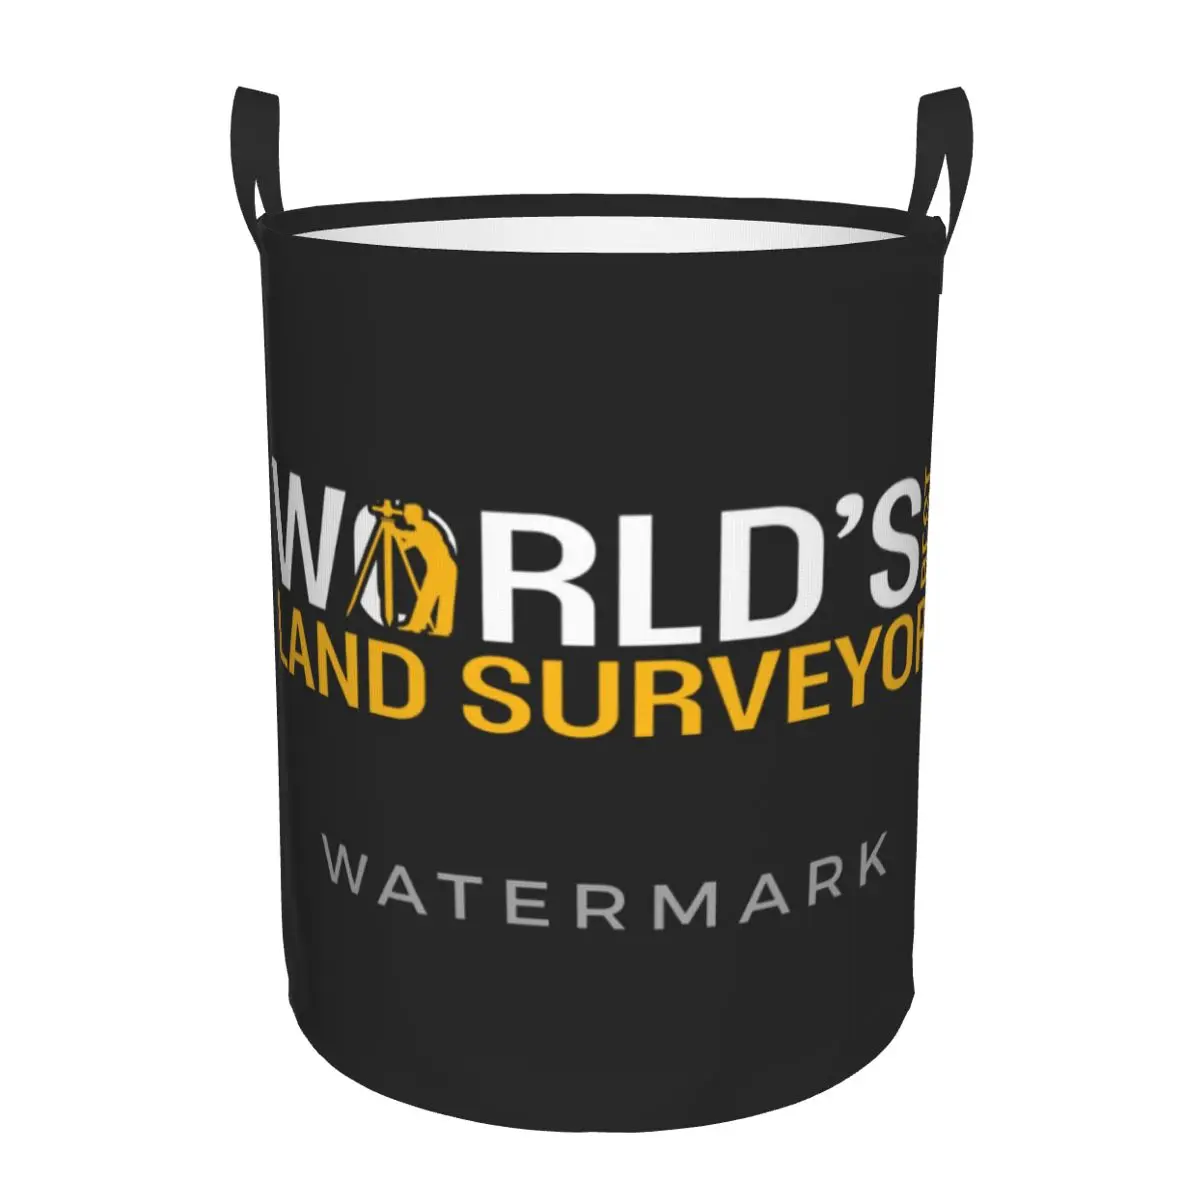 

World S Best Land Surveyor Circular hamper,Storage Basket Sturdy and durable bathrooms books